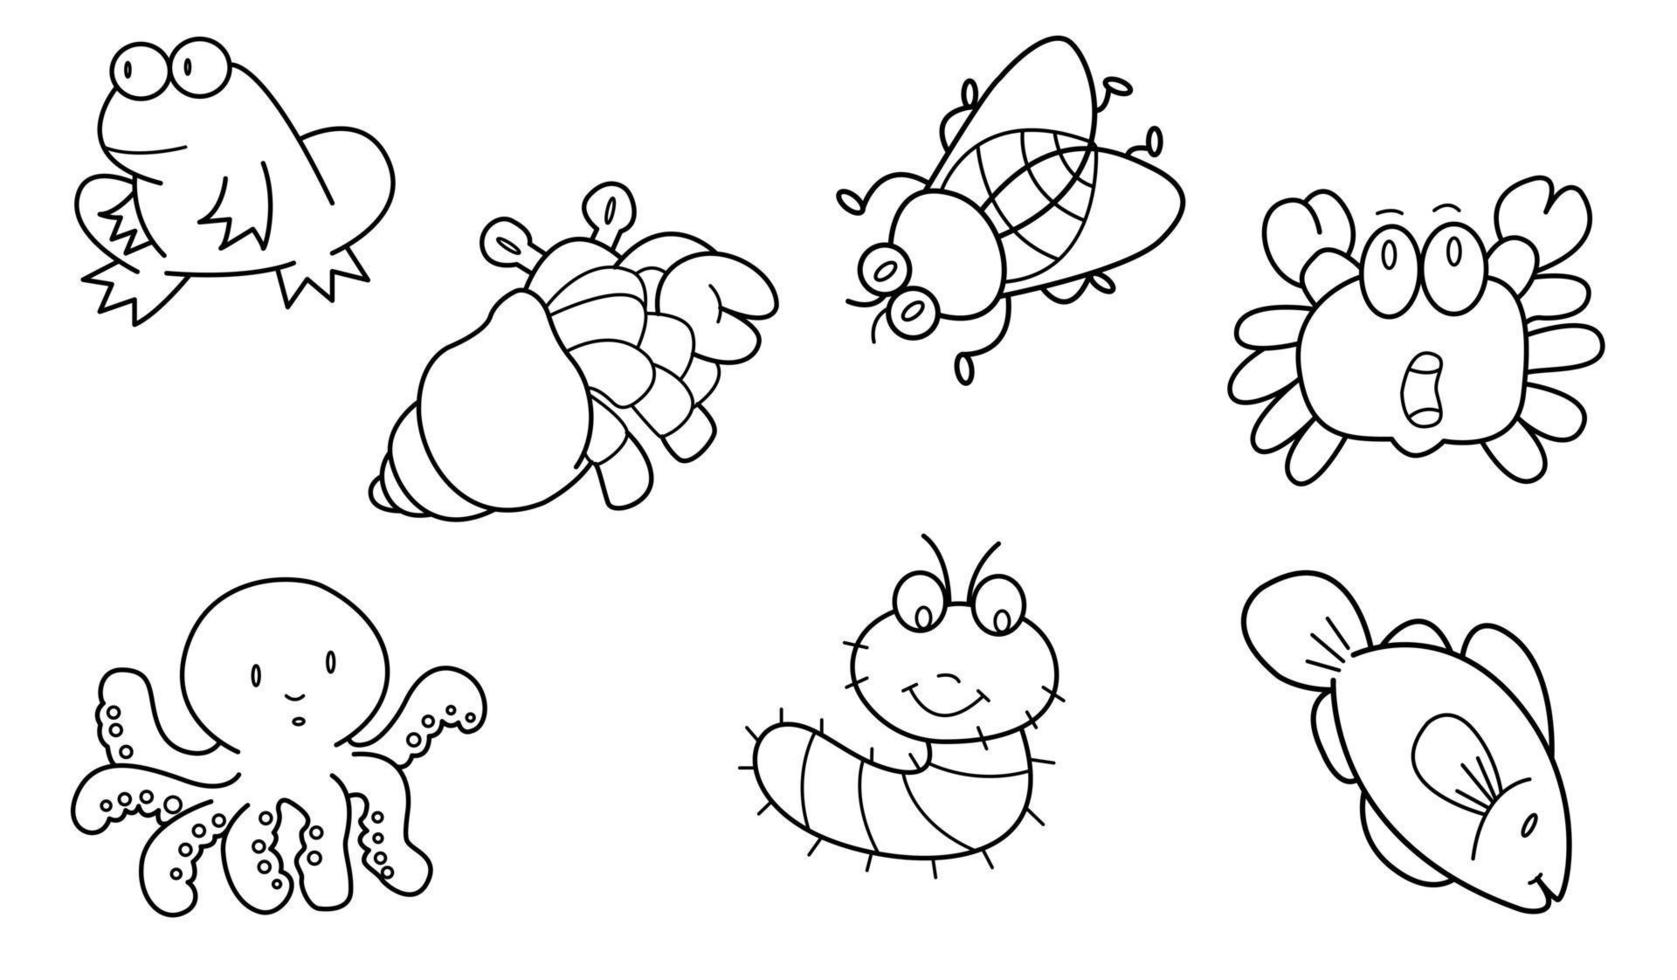 desenho bonito conjunto de vetores de contorno animal 17, sapo eremita-caranguejo caranguejo peixe verme lula libélula